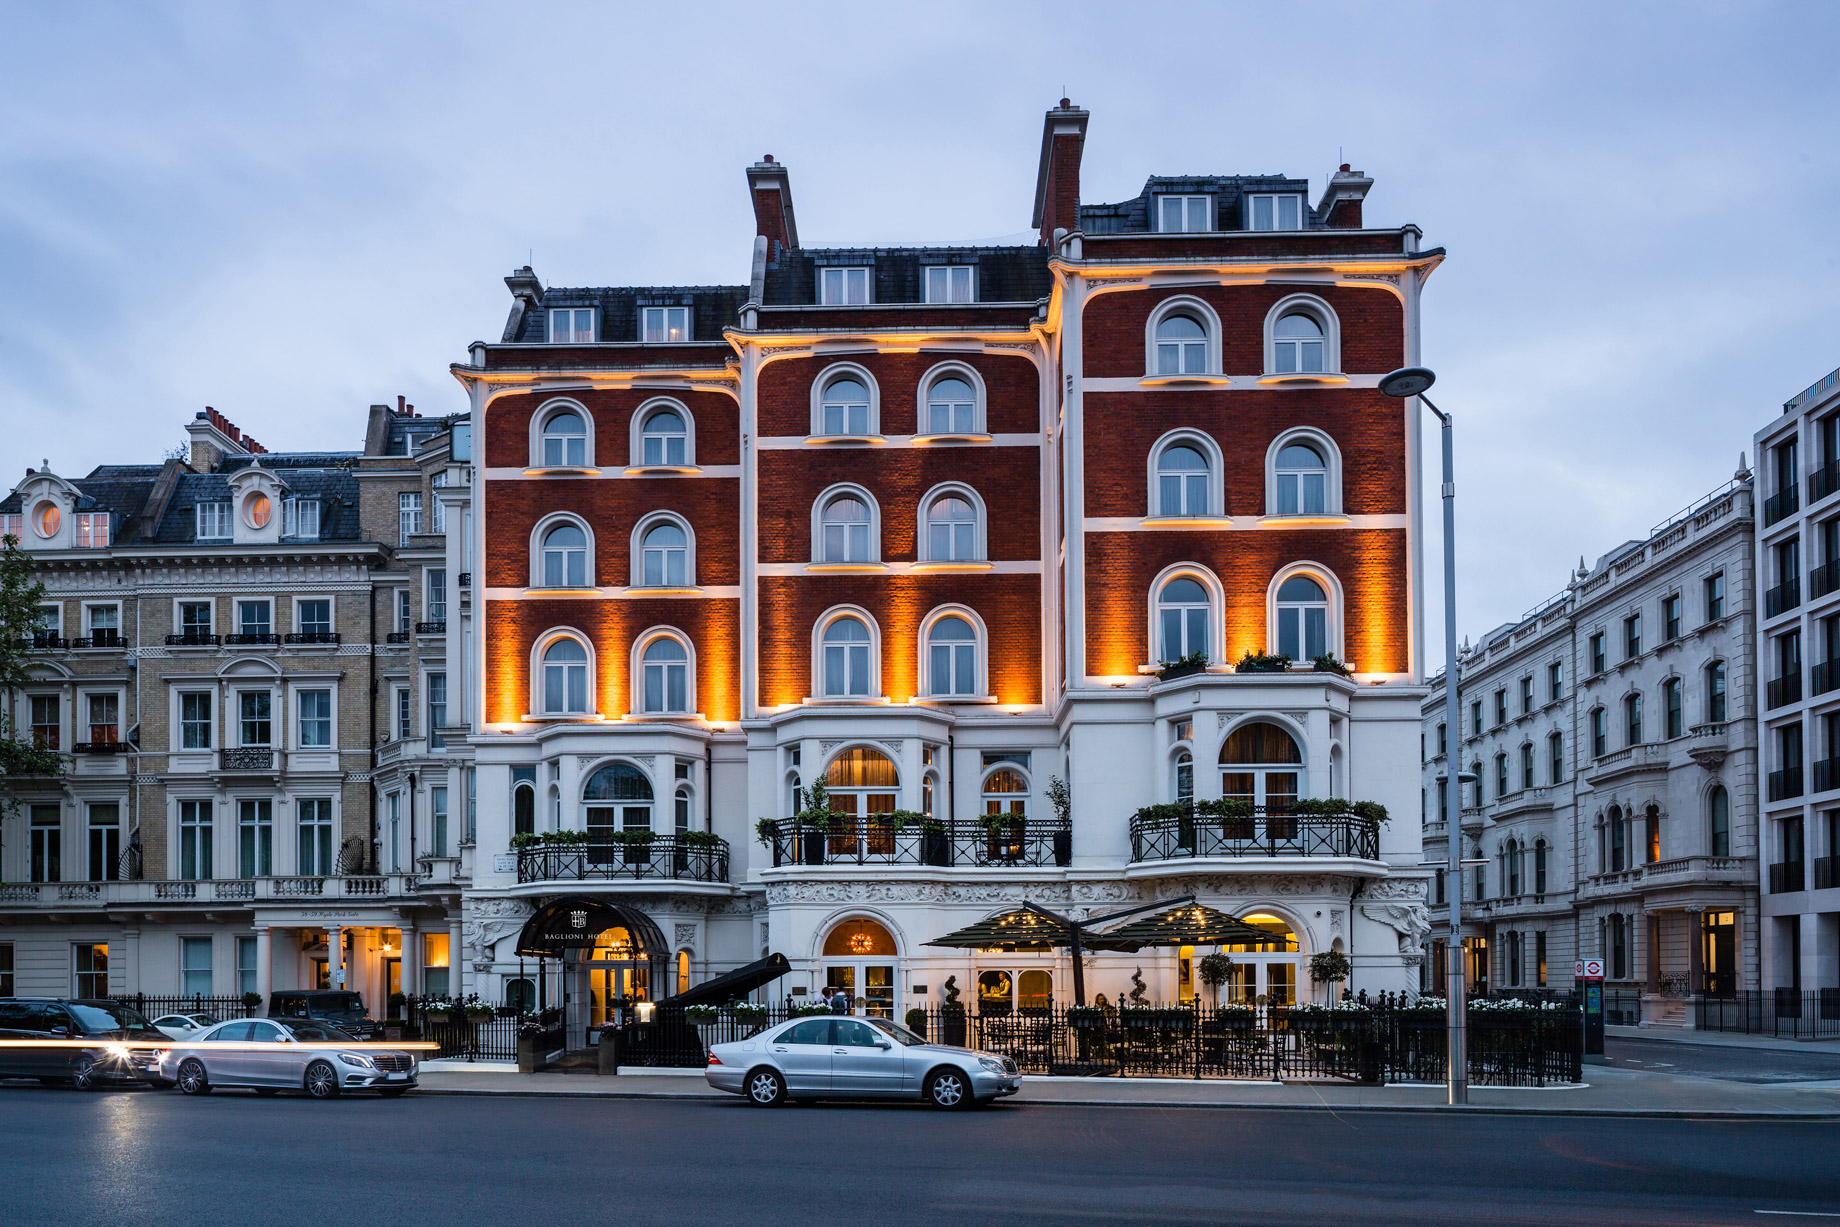 Baglioni Hotel London – South Kensington, London, United Kingdom – Exterior Night